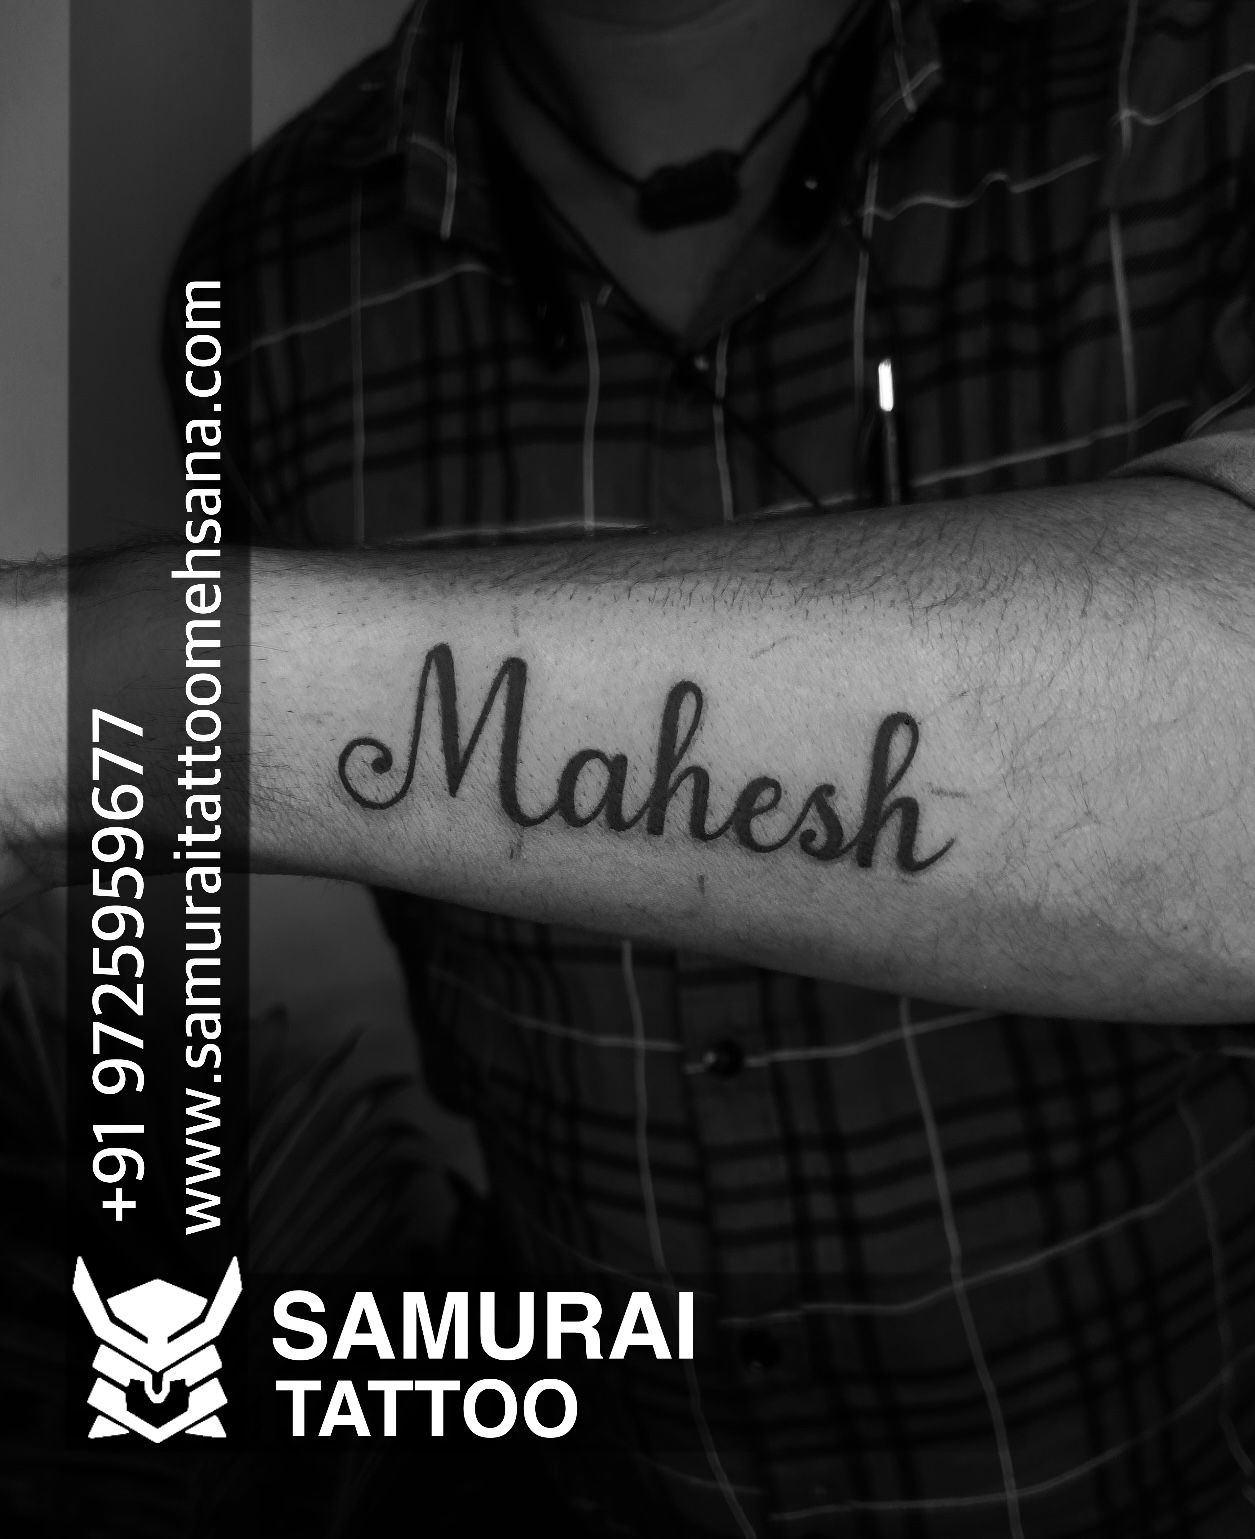 Tattoo uploaded by Samurai Tattoo mehsana  Mahesh name tattoo Mahesh  tattoo Mahesh name tattoo design Mahesh name tattoo ideas  Tattoodo